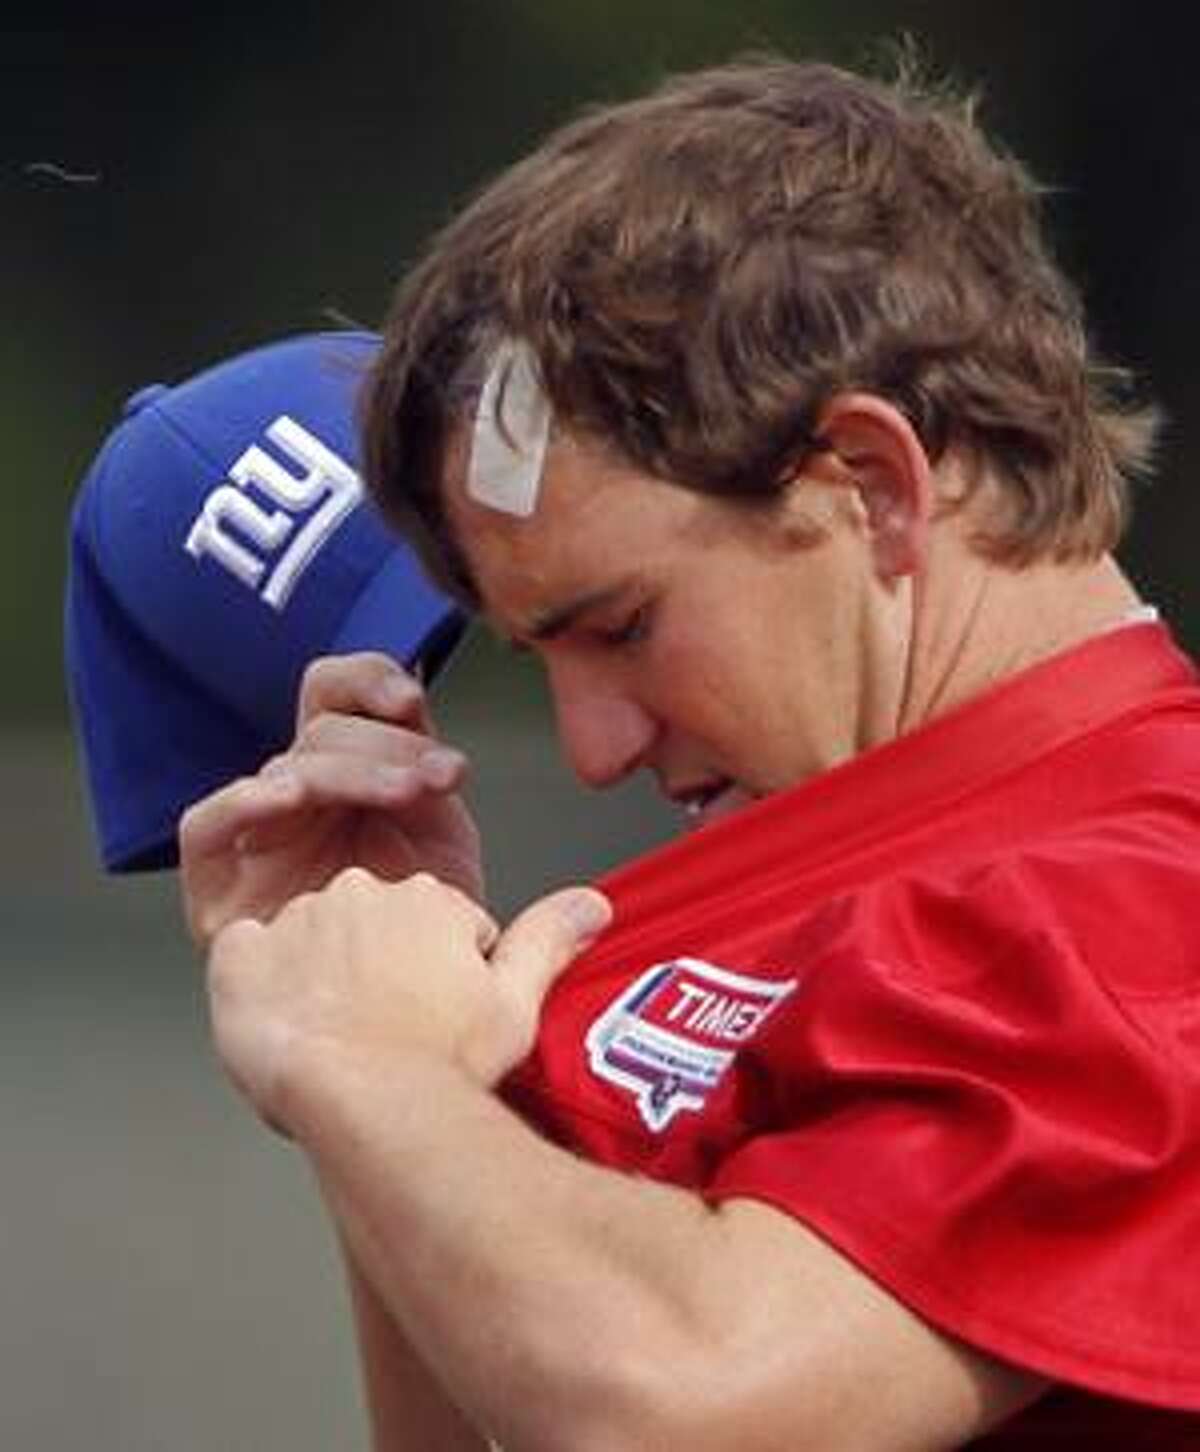 Giants teammates mock Cruz for red jersey